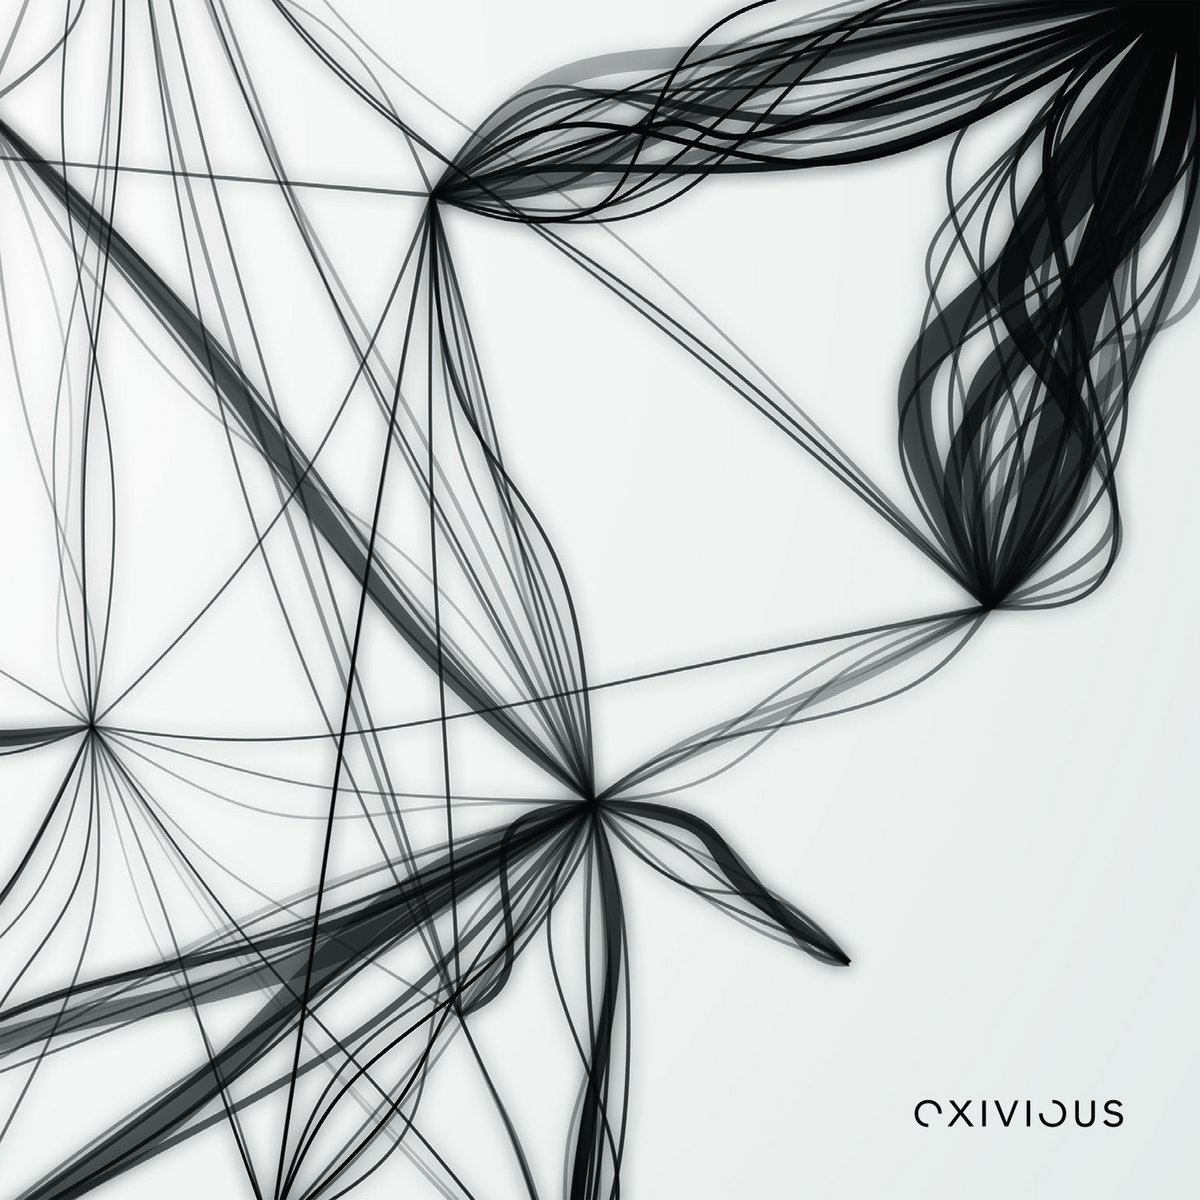 Exivious - "Liminal" - 2013